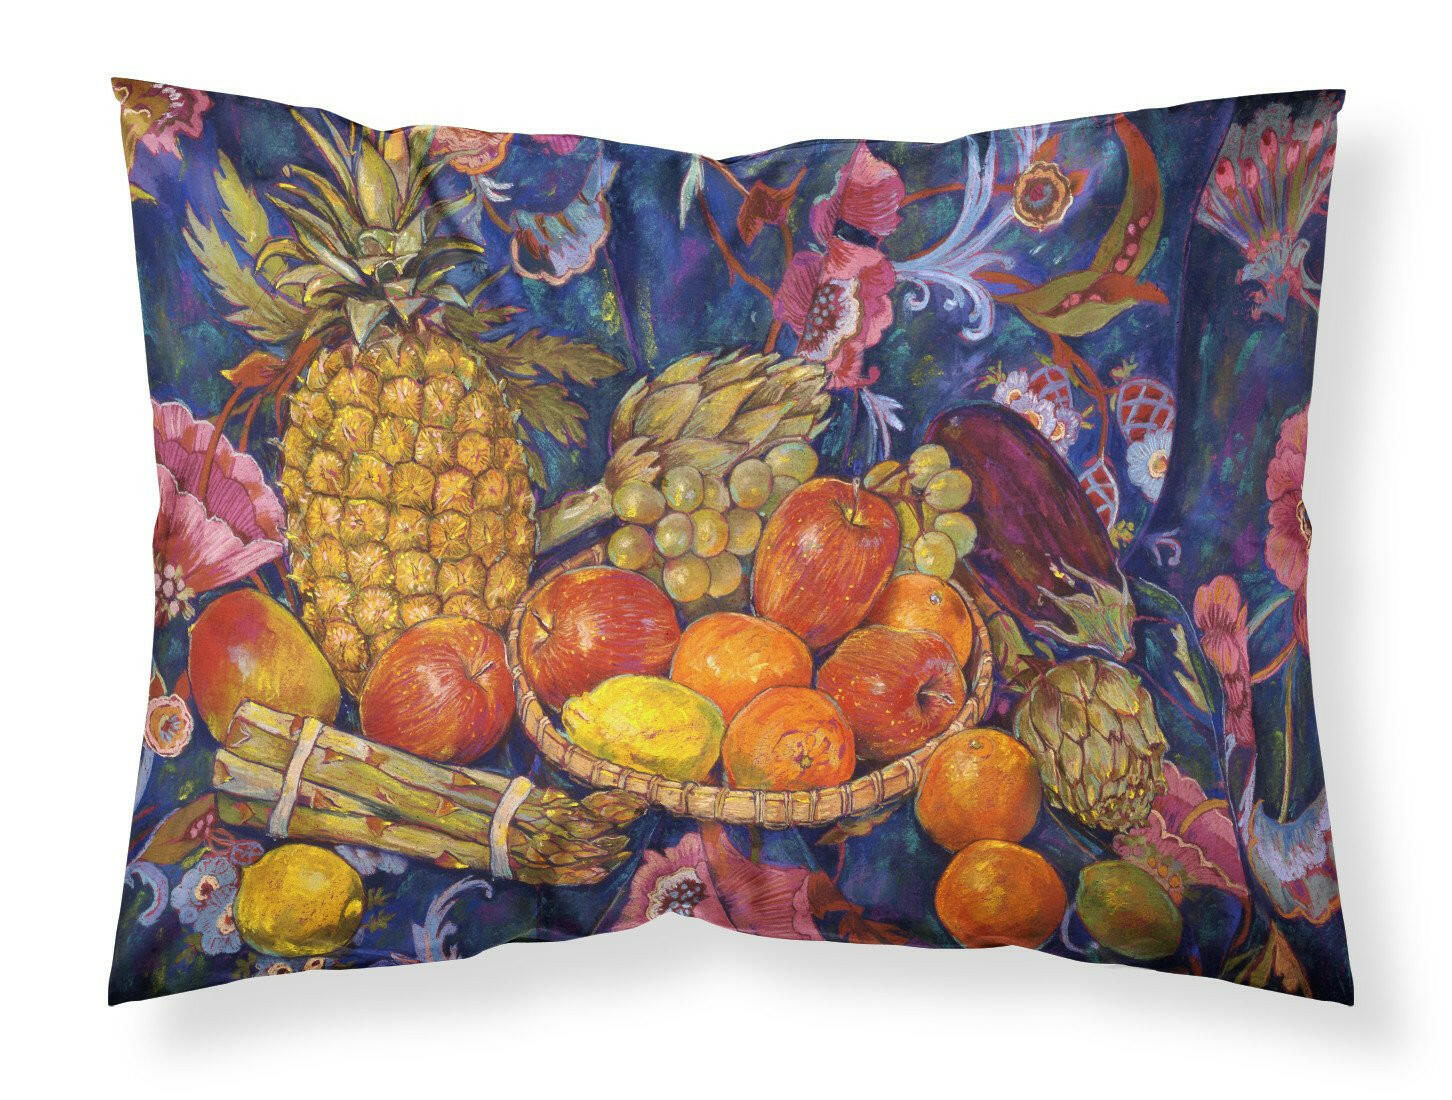 Fruit & Vegetables by Neil Drury Fabric Standard Pillowcase DND0018PILLOWCASE by Caroline's Treasures